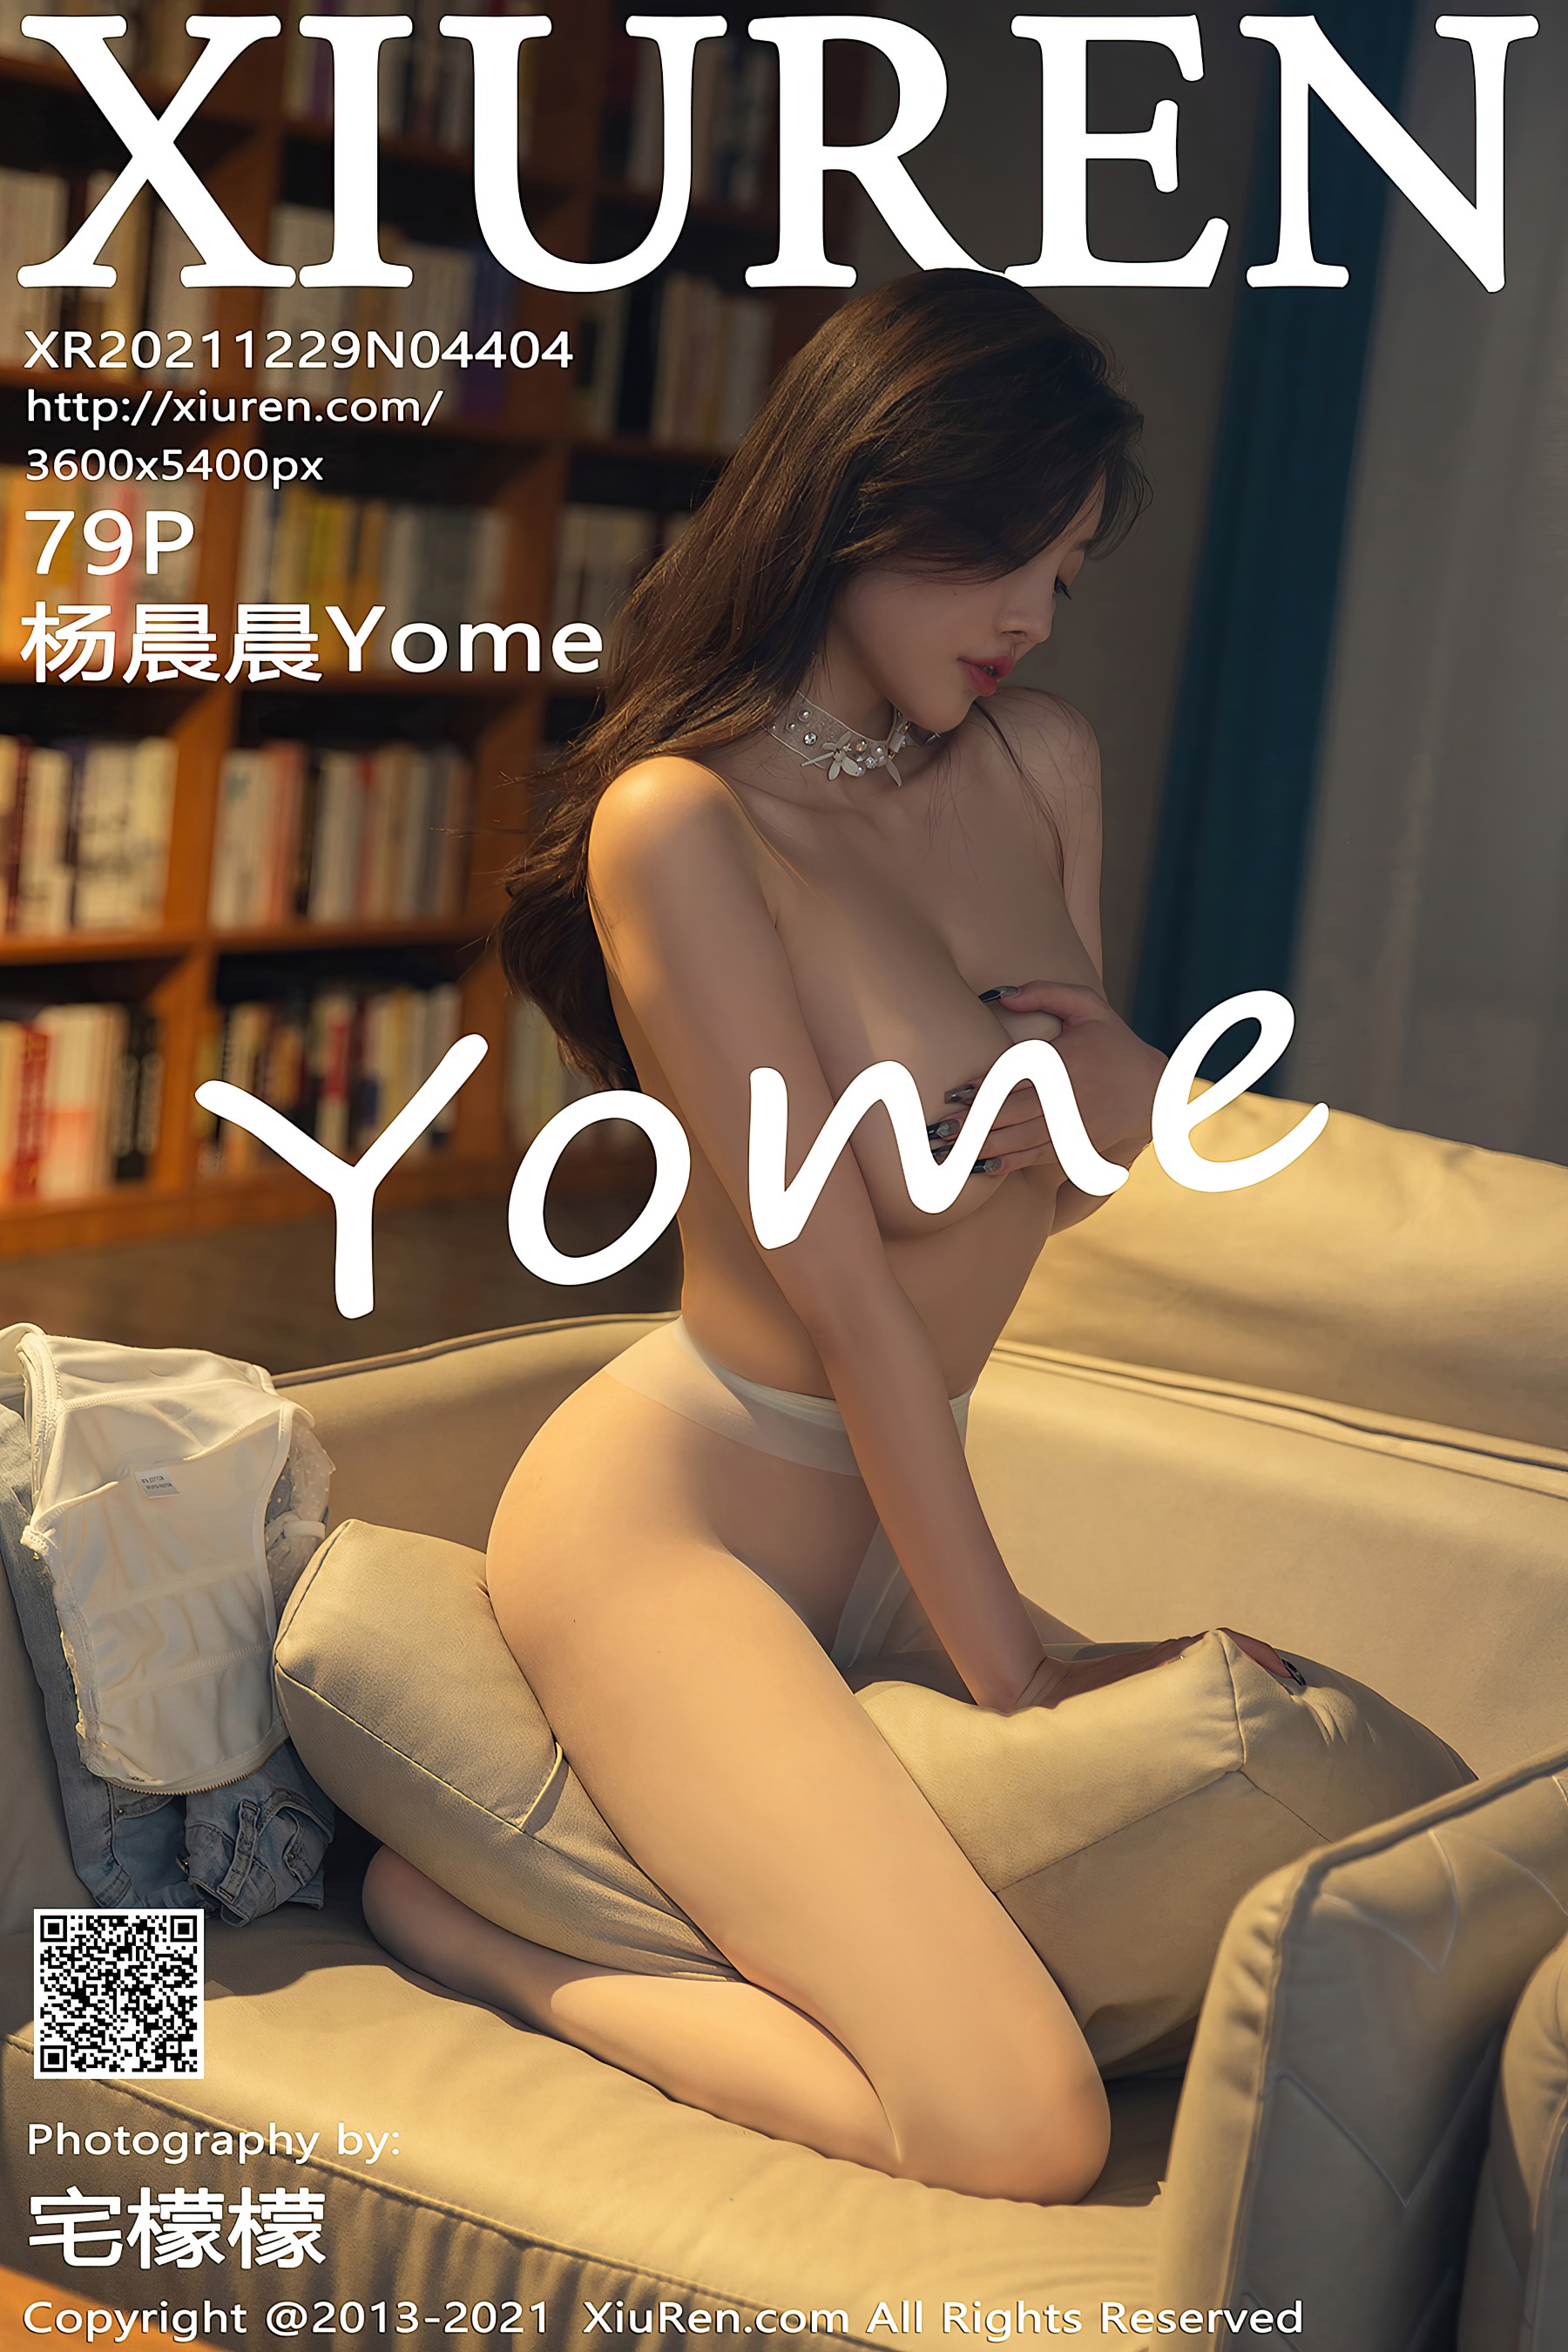 [XiuRen秀人网] No.4404 杨晨晨Yome 图书馆偷窥半裸美女主题(1)